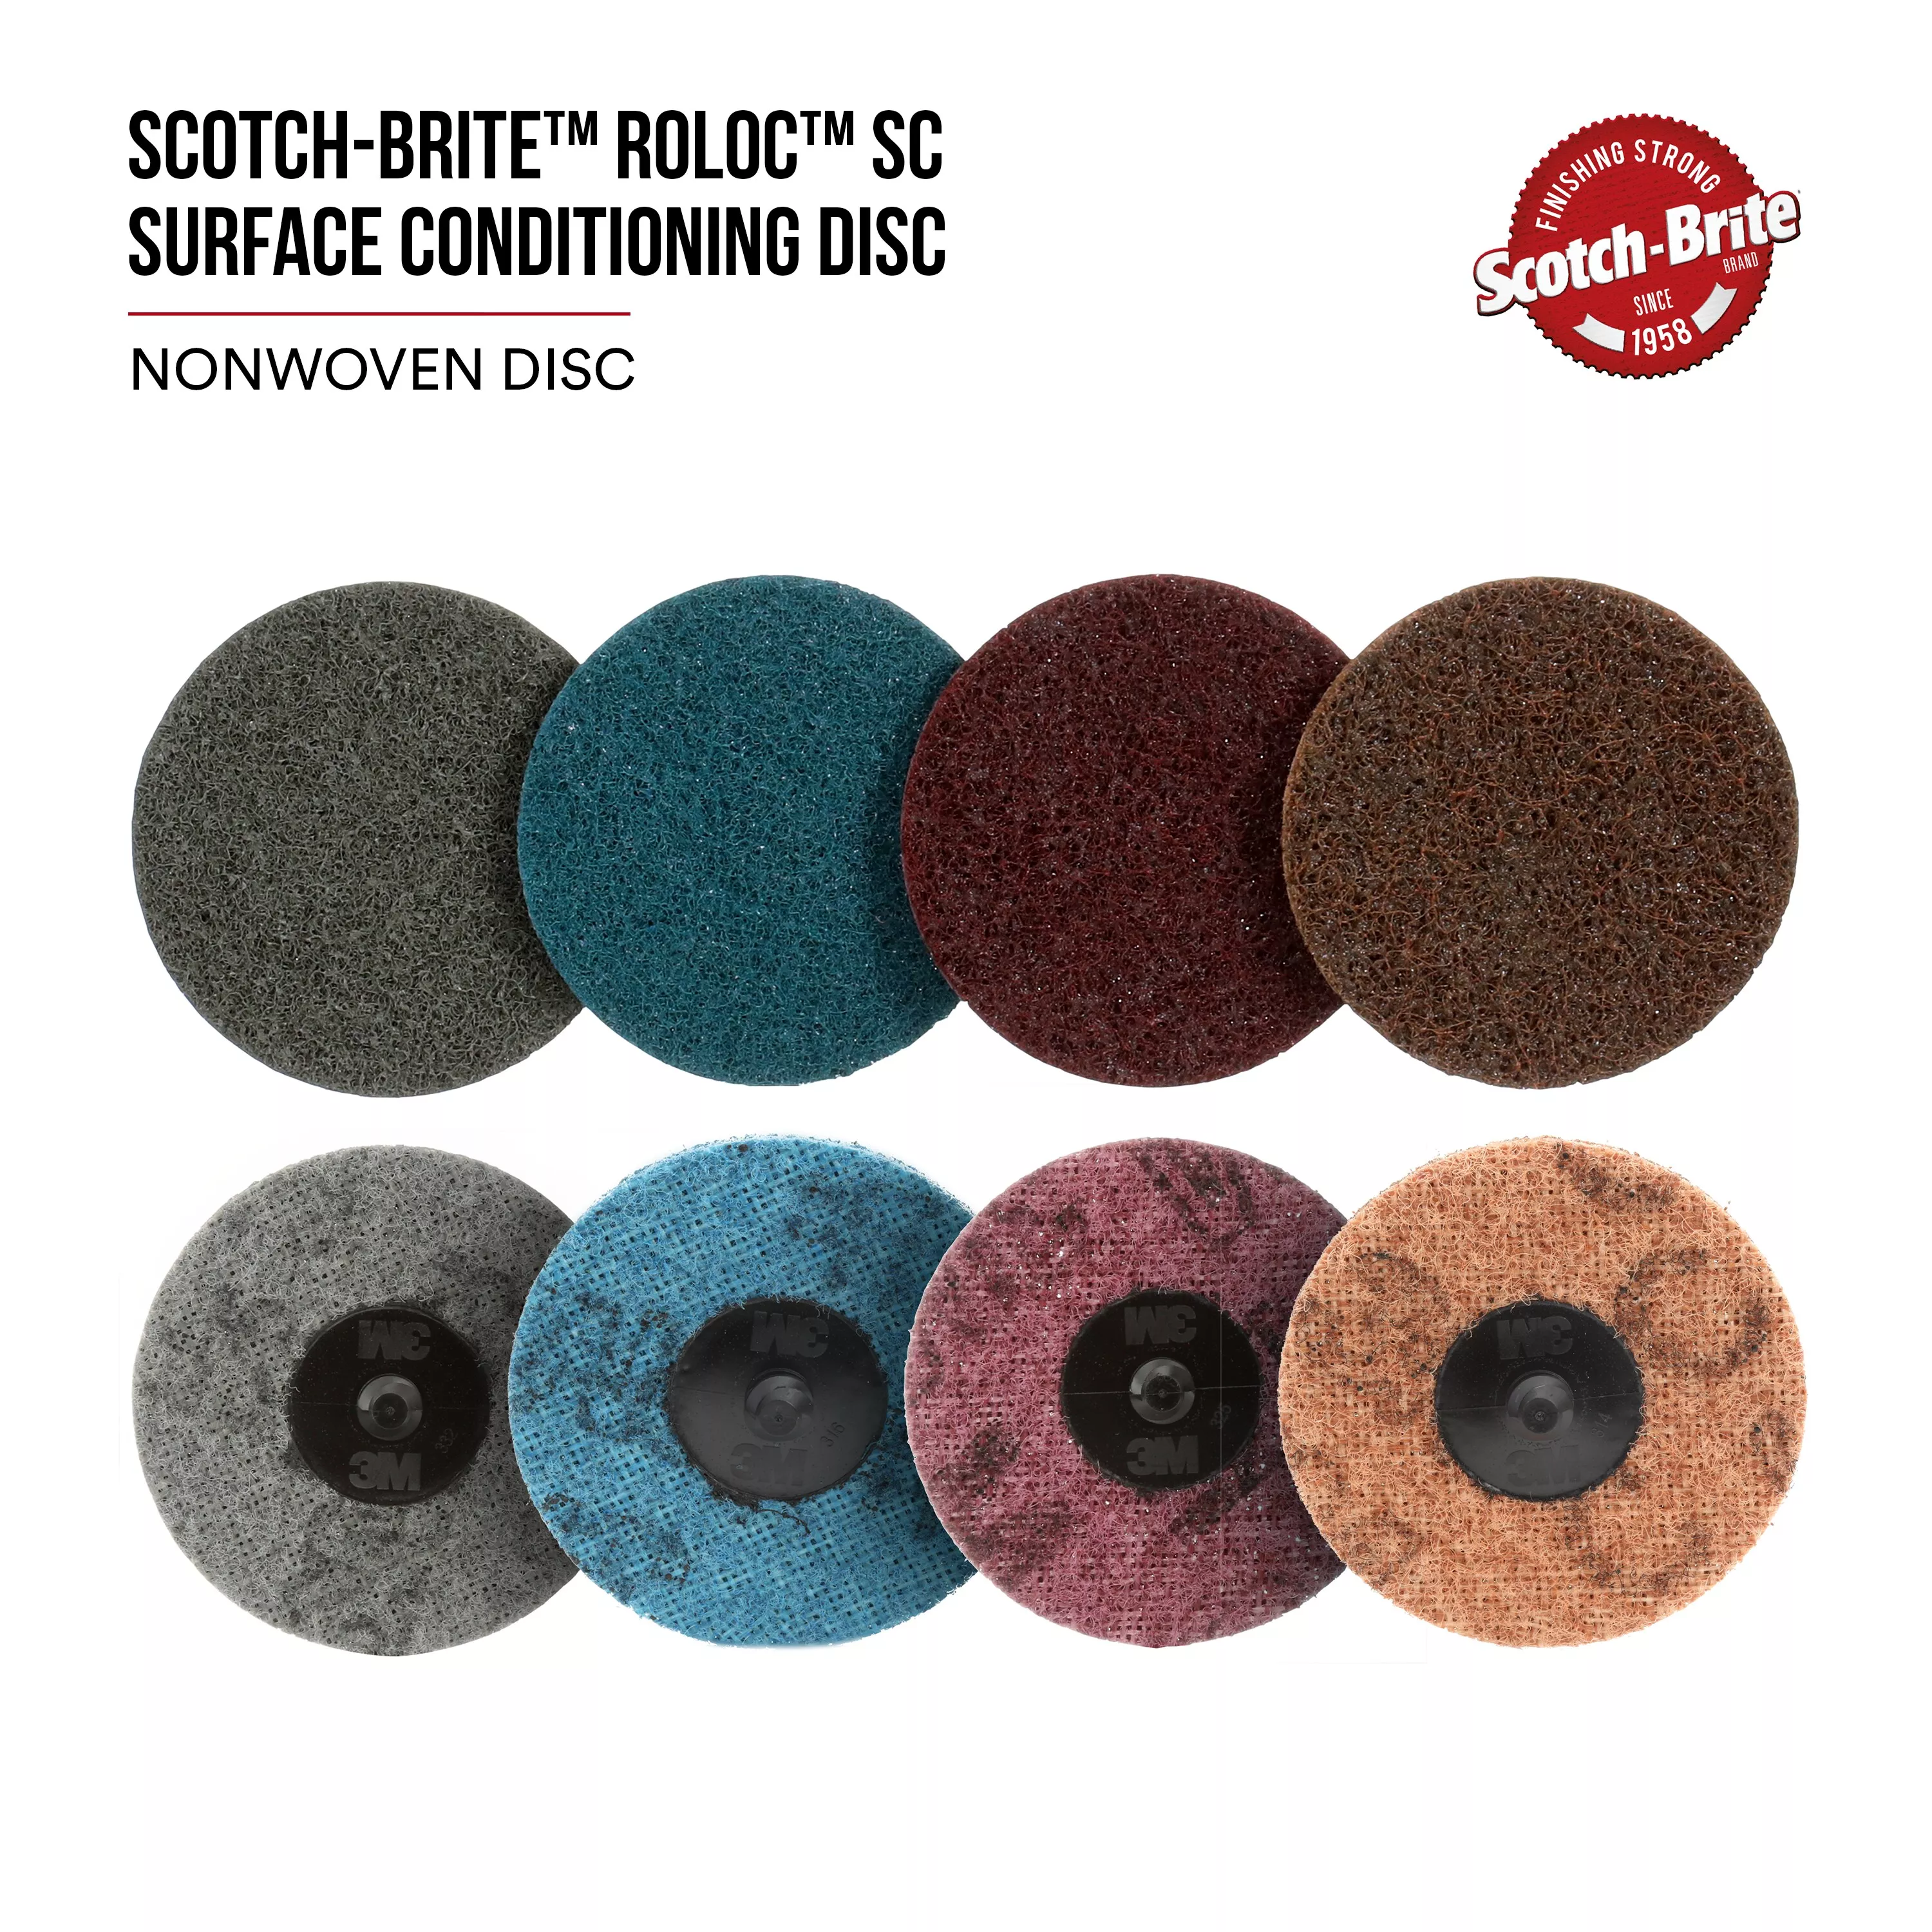 SKU 7100035317 | Scotch-Brite™ Roloc™ Surface Conditioning Disc